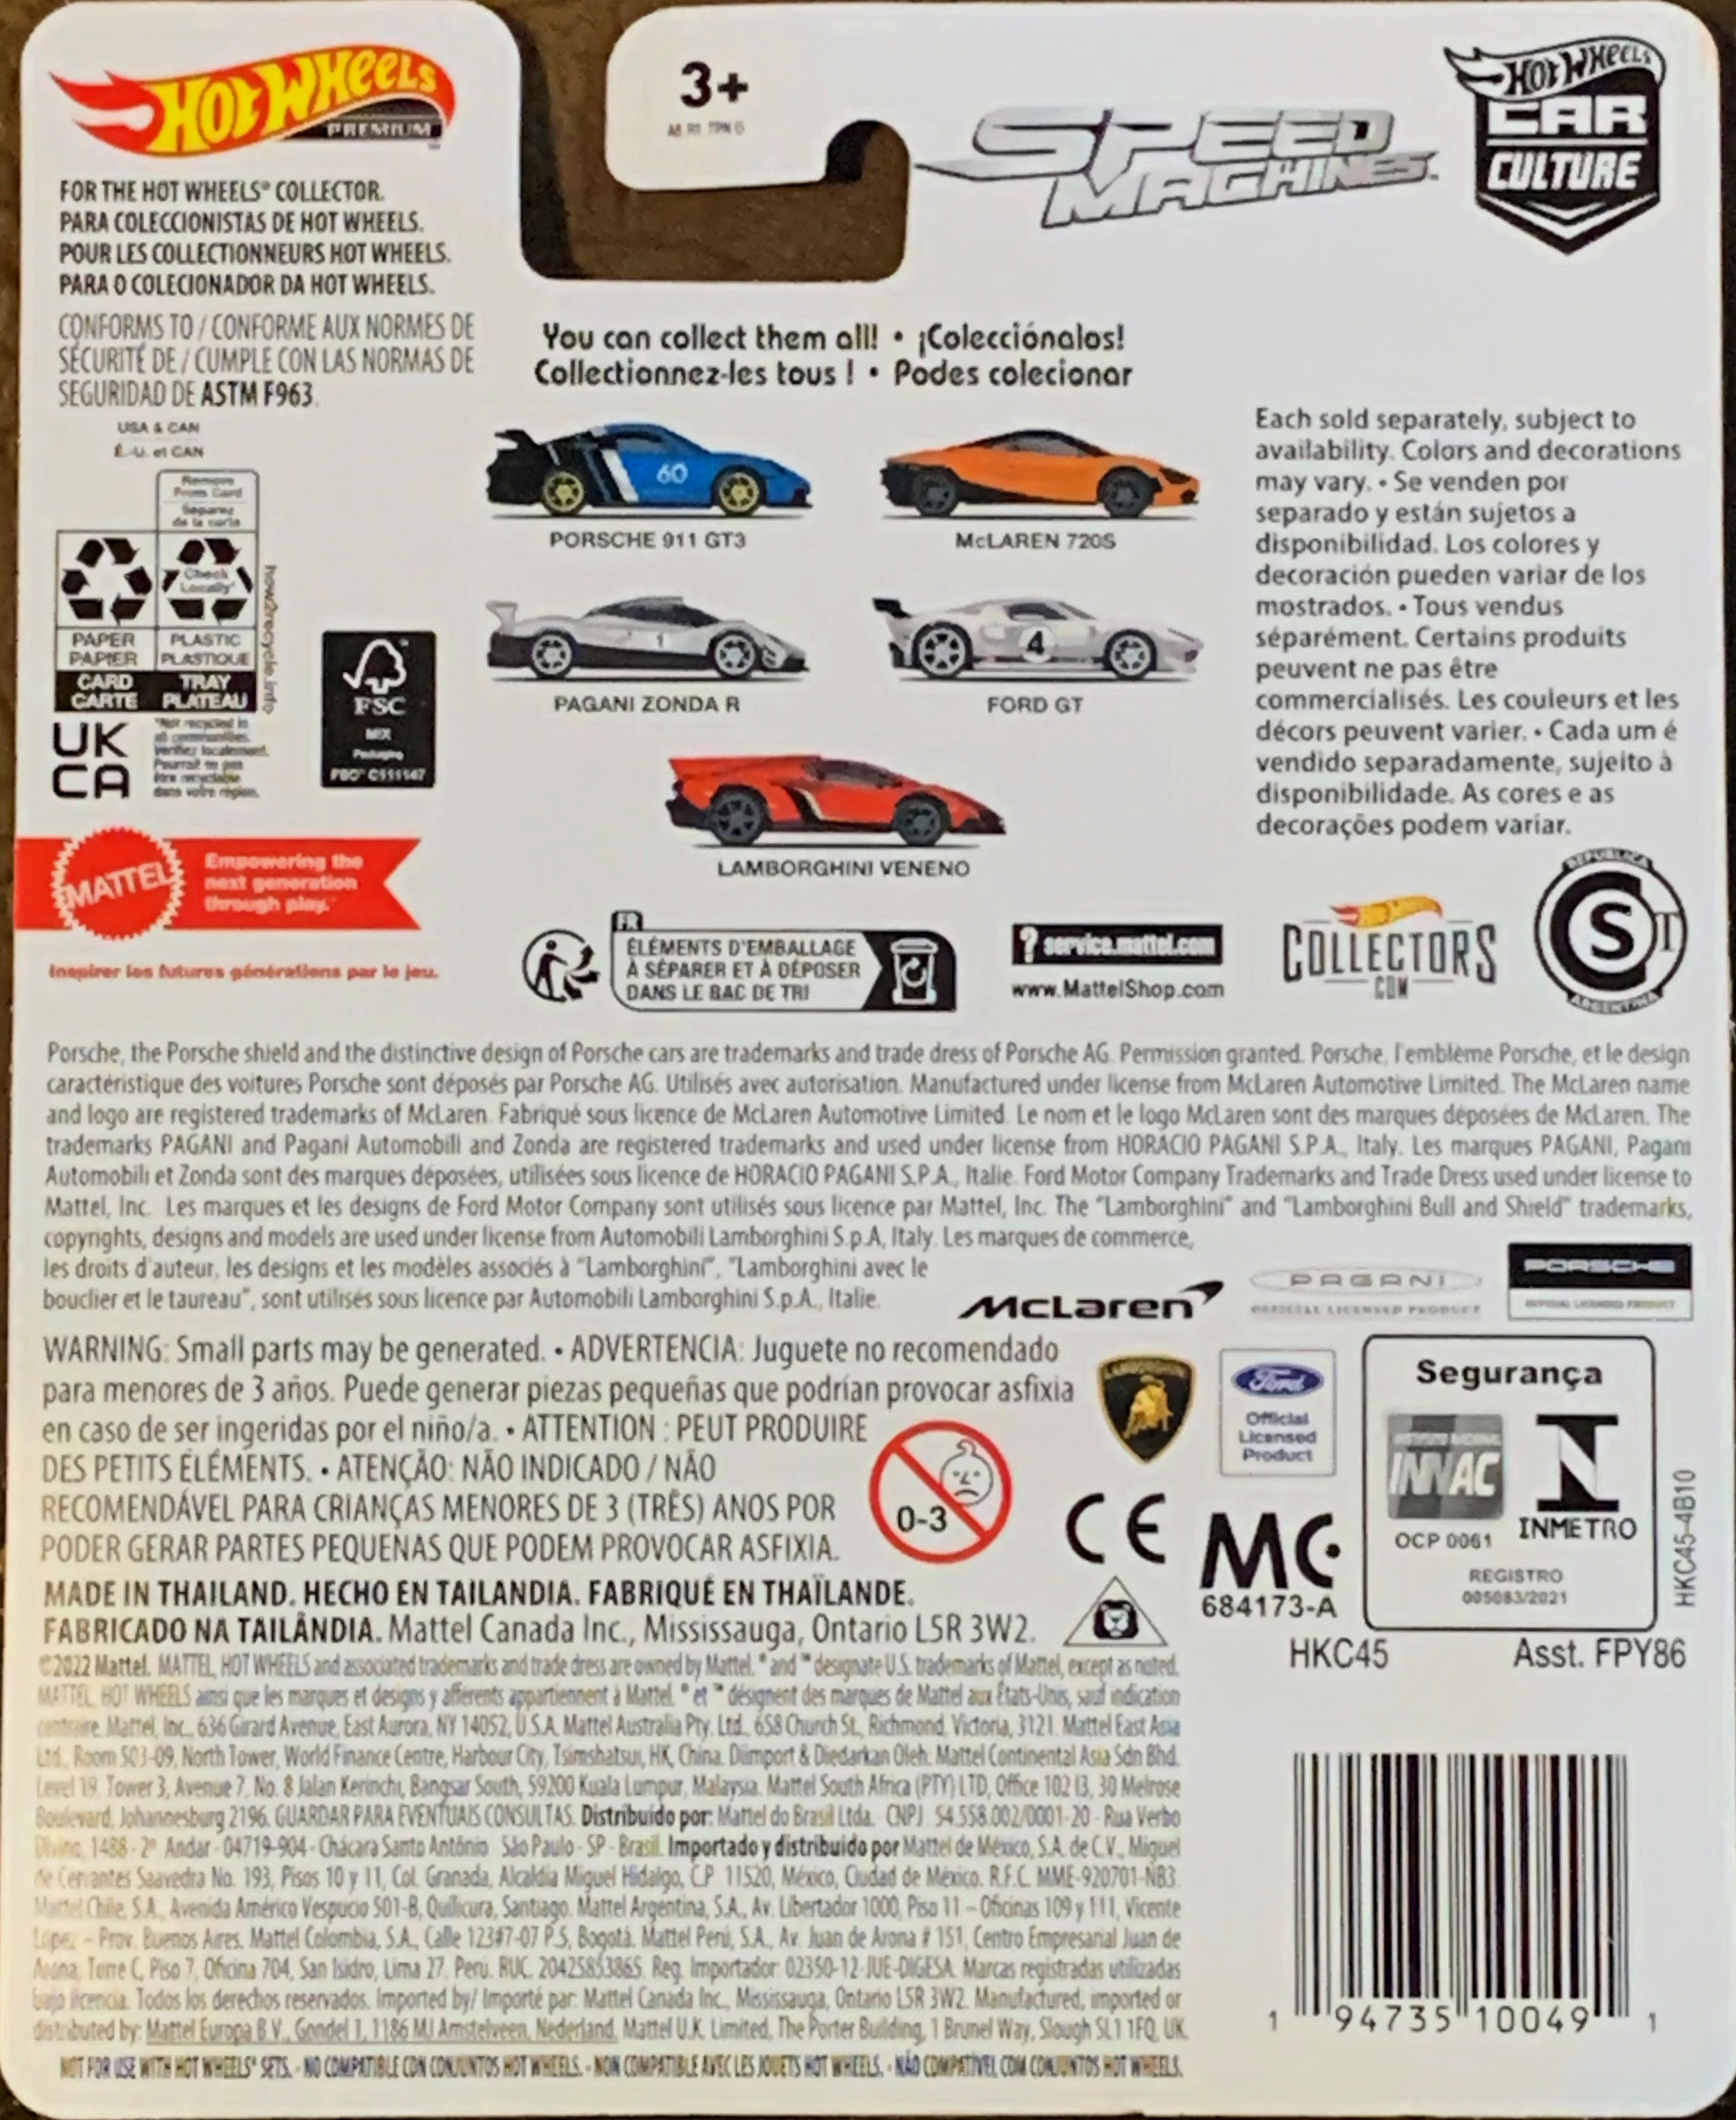 Hot Wheels Premium Car Culture 2023 Speed Machines - Porsche 911 GT3 (black) - Chase 0/5 - image 2 of 2